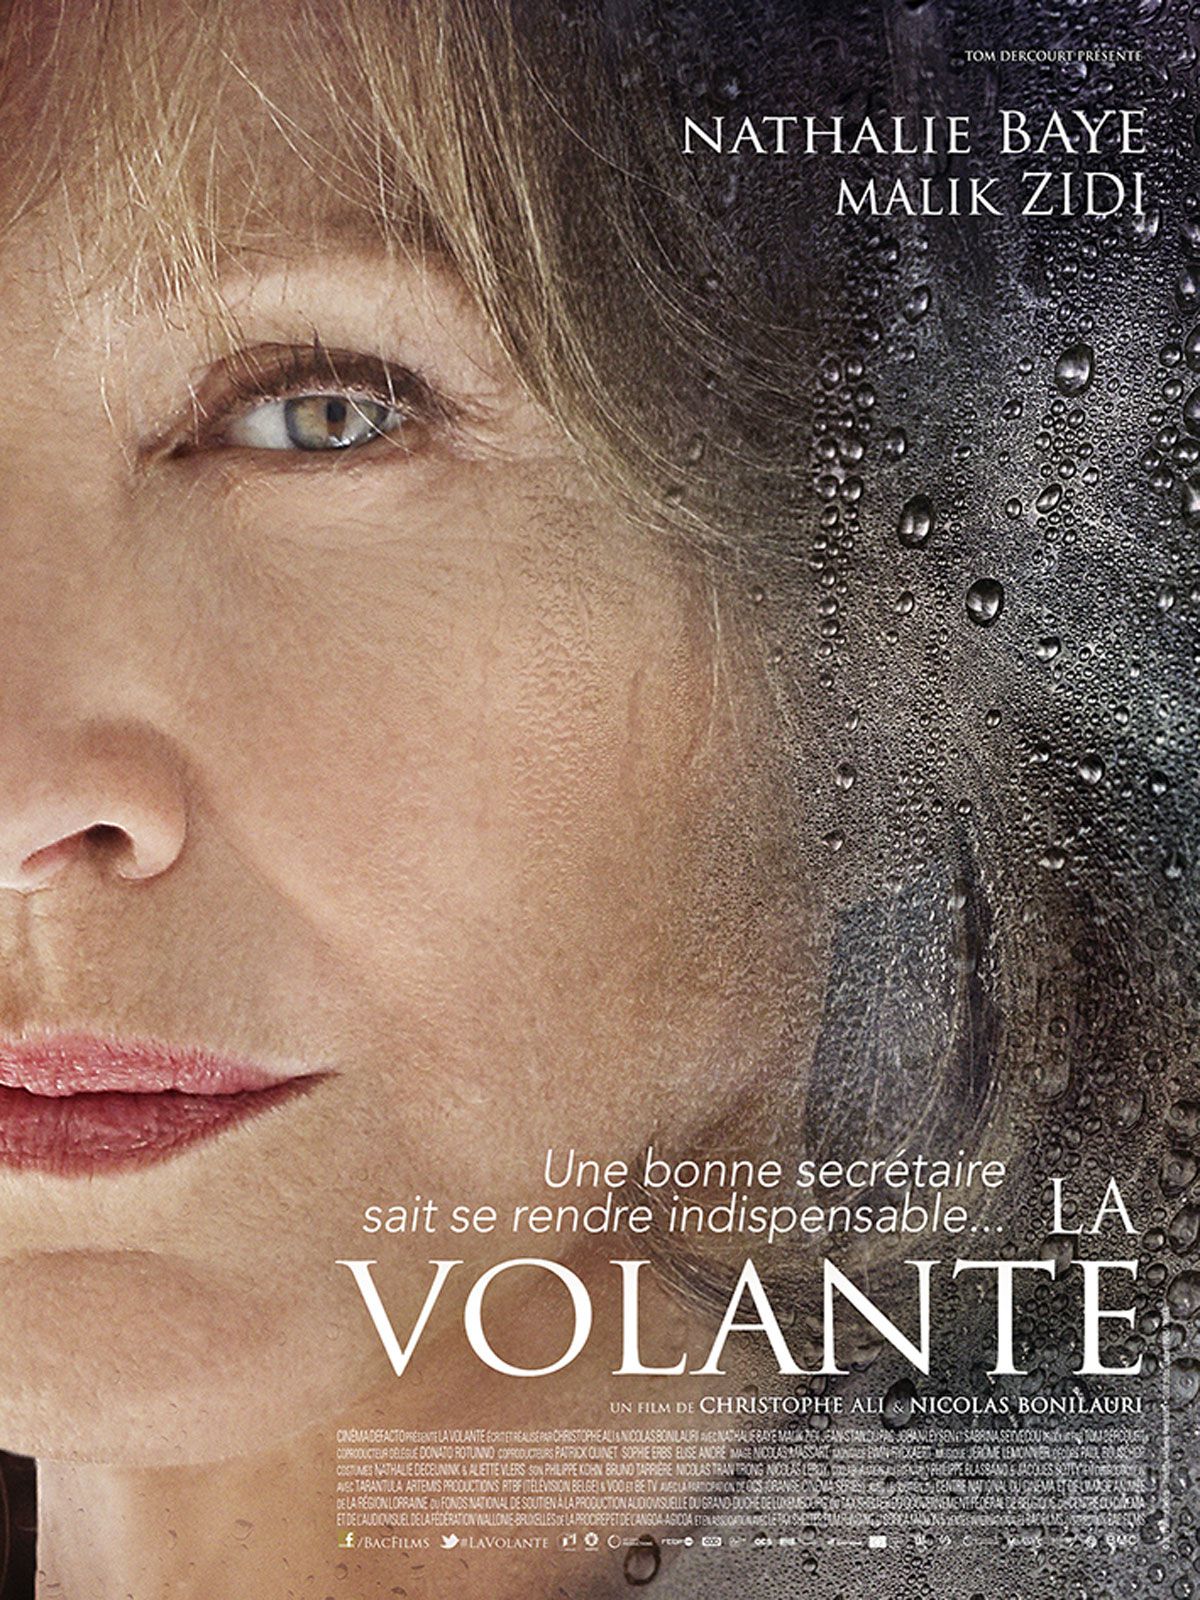 La Volante - Film (2015) streaming VF gratuit complet